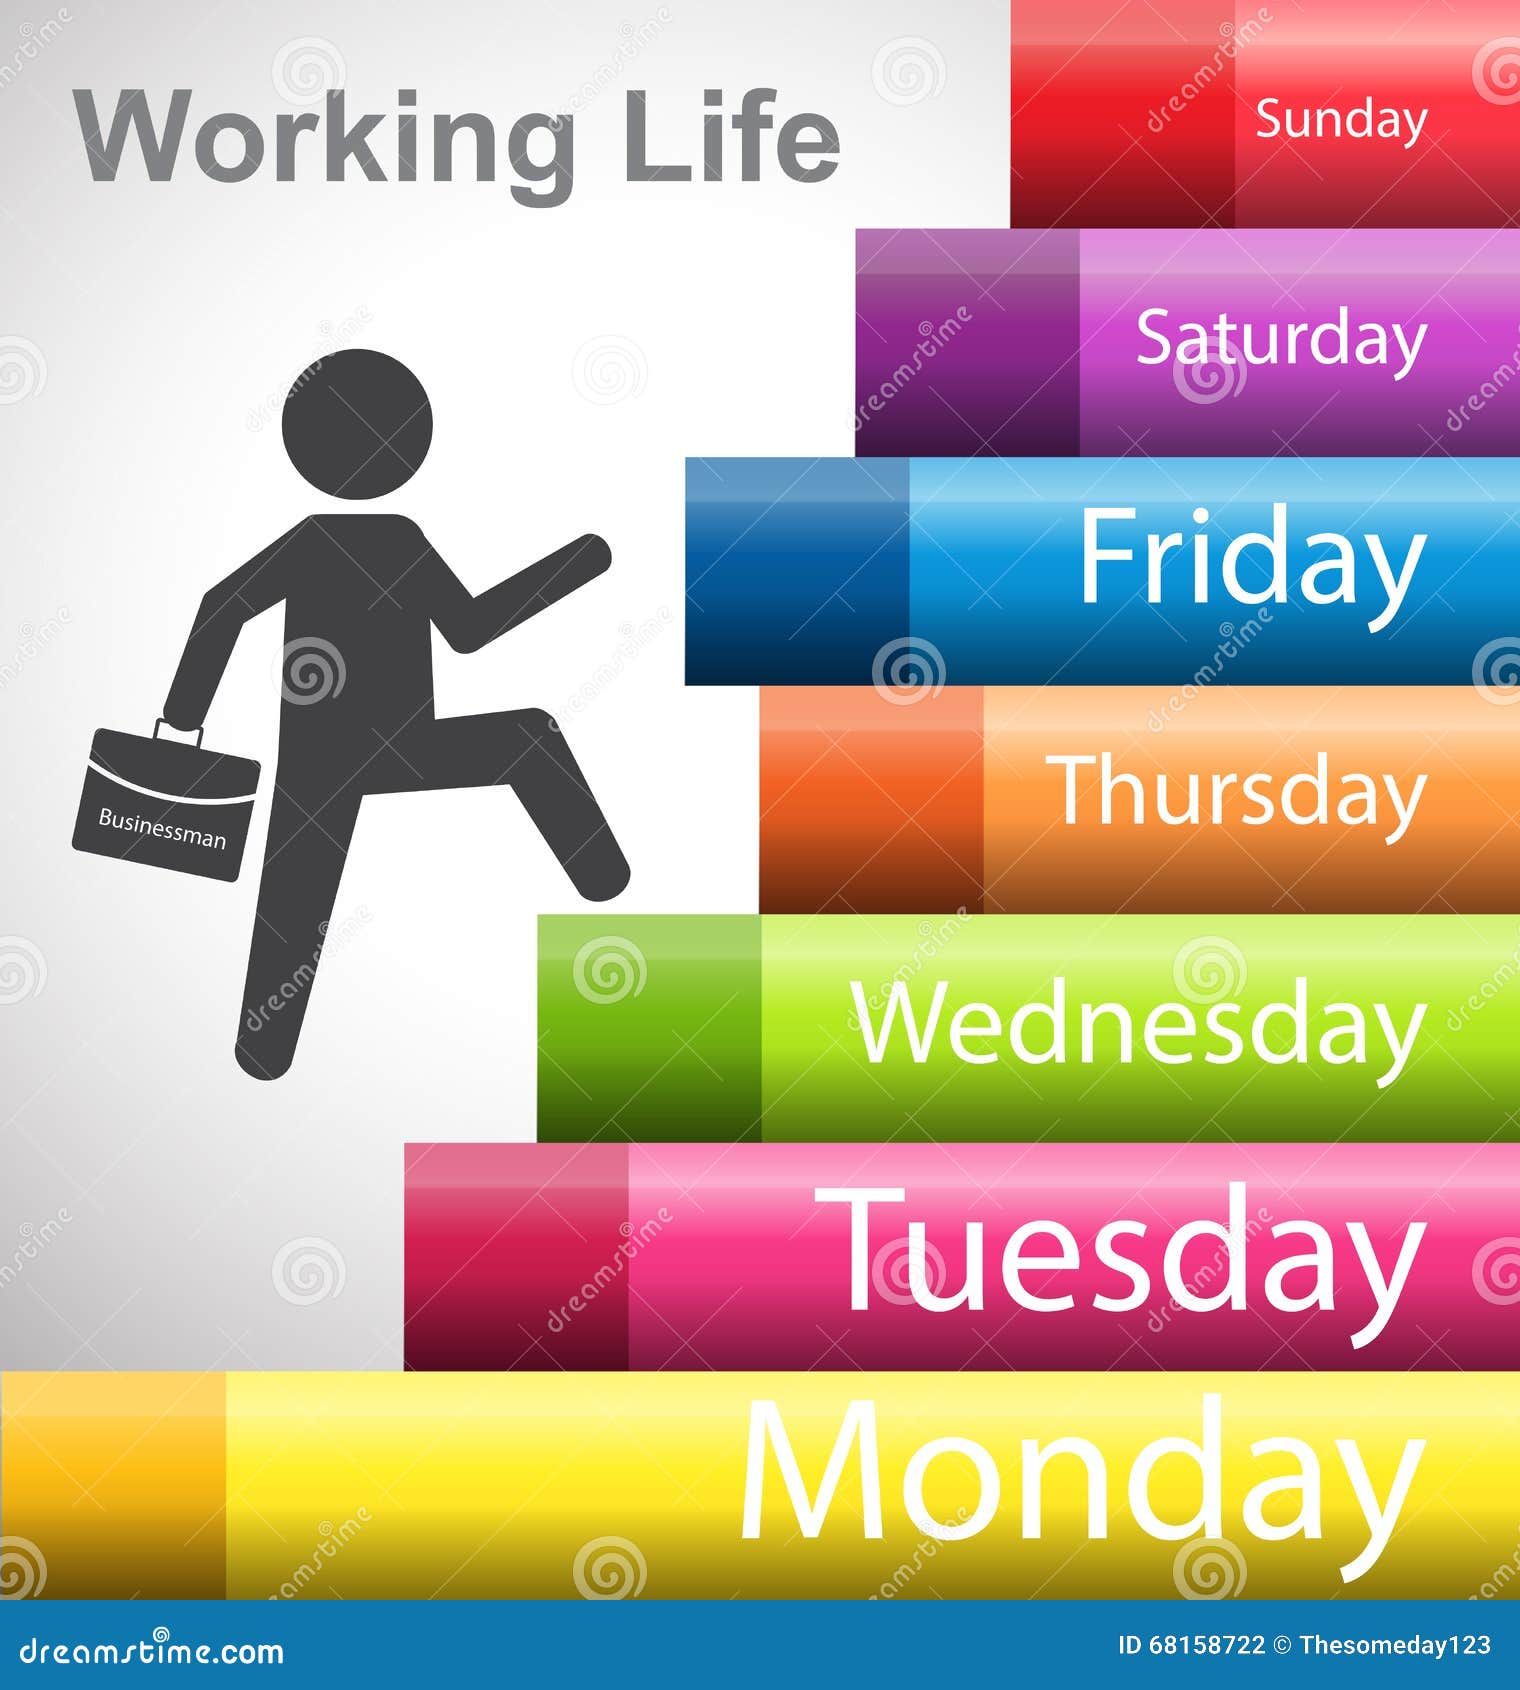 Working life ответы. Working Life. Лайф ворк логотип. Working Life перевод. Everyday Business Life учебник.